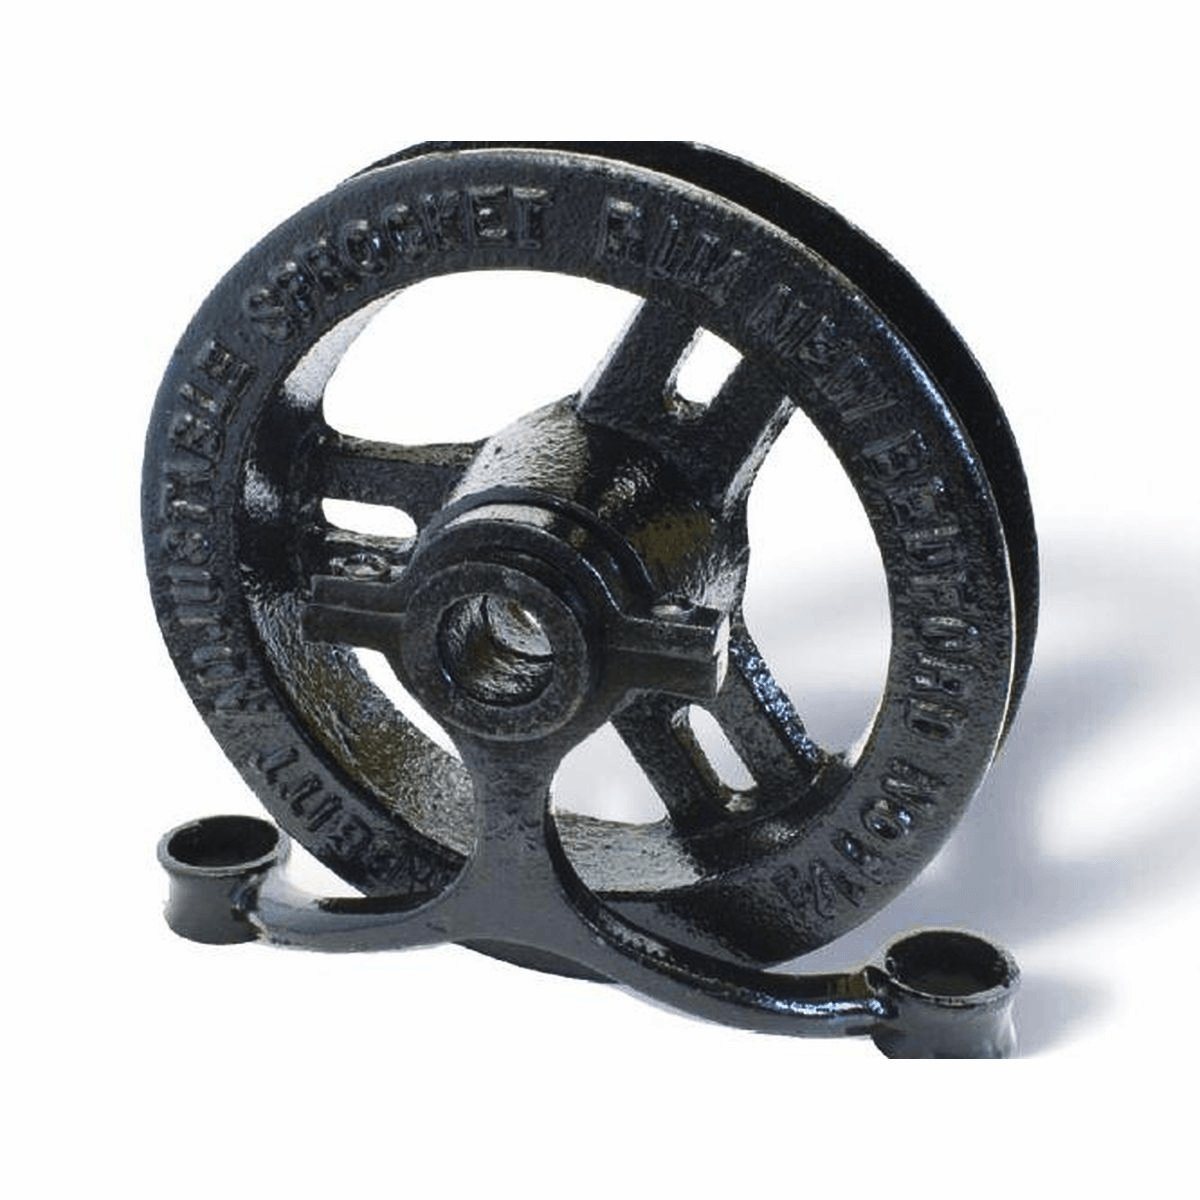 Cast Iron Chain Wheel